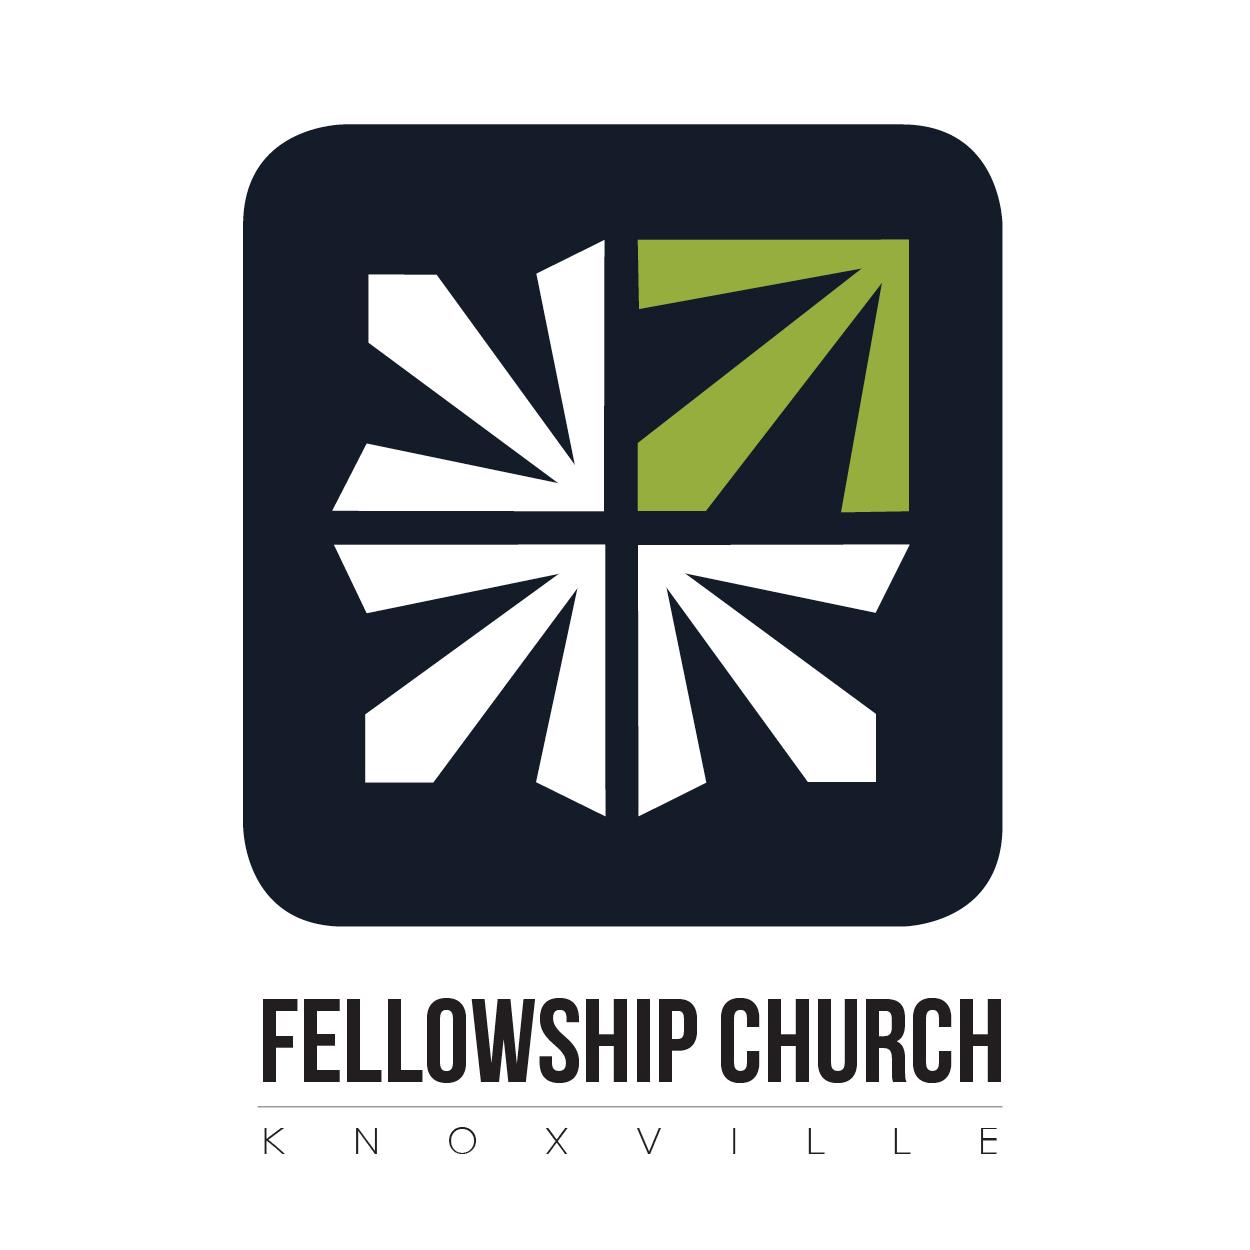 Knoxville Logo - Fellowship Church Knoxville Logo Habitat for Humanity